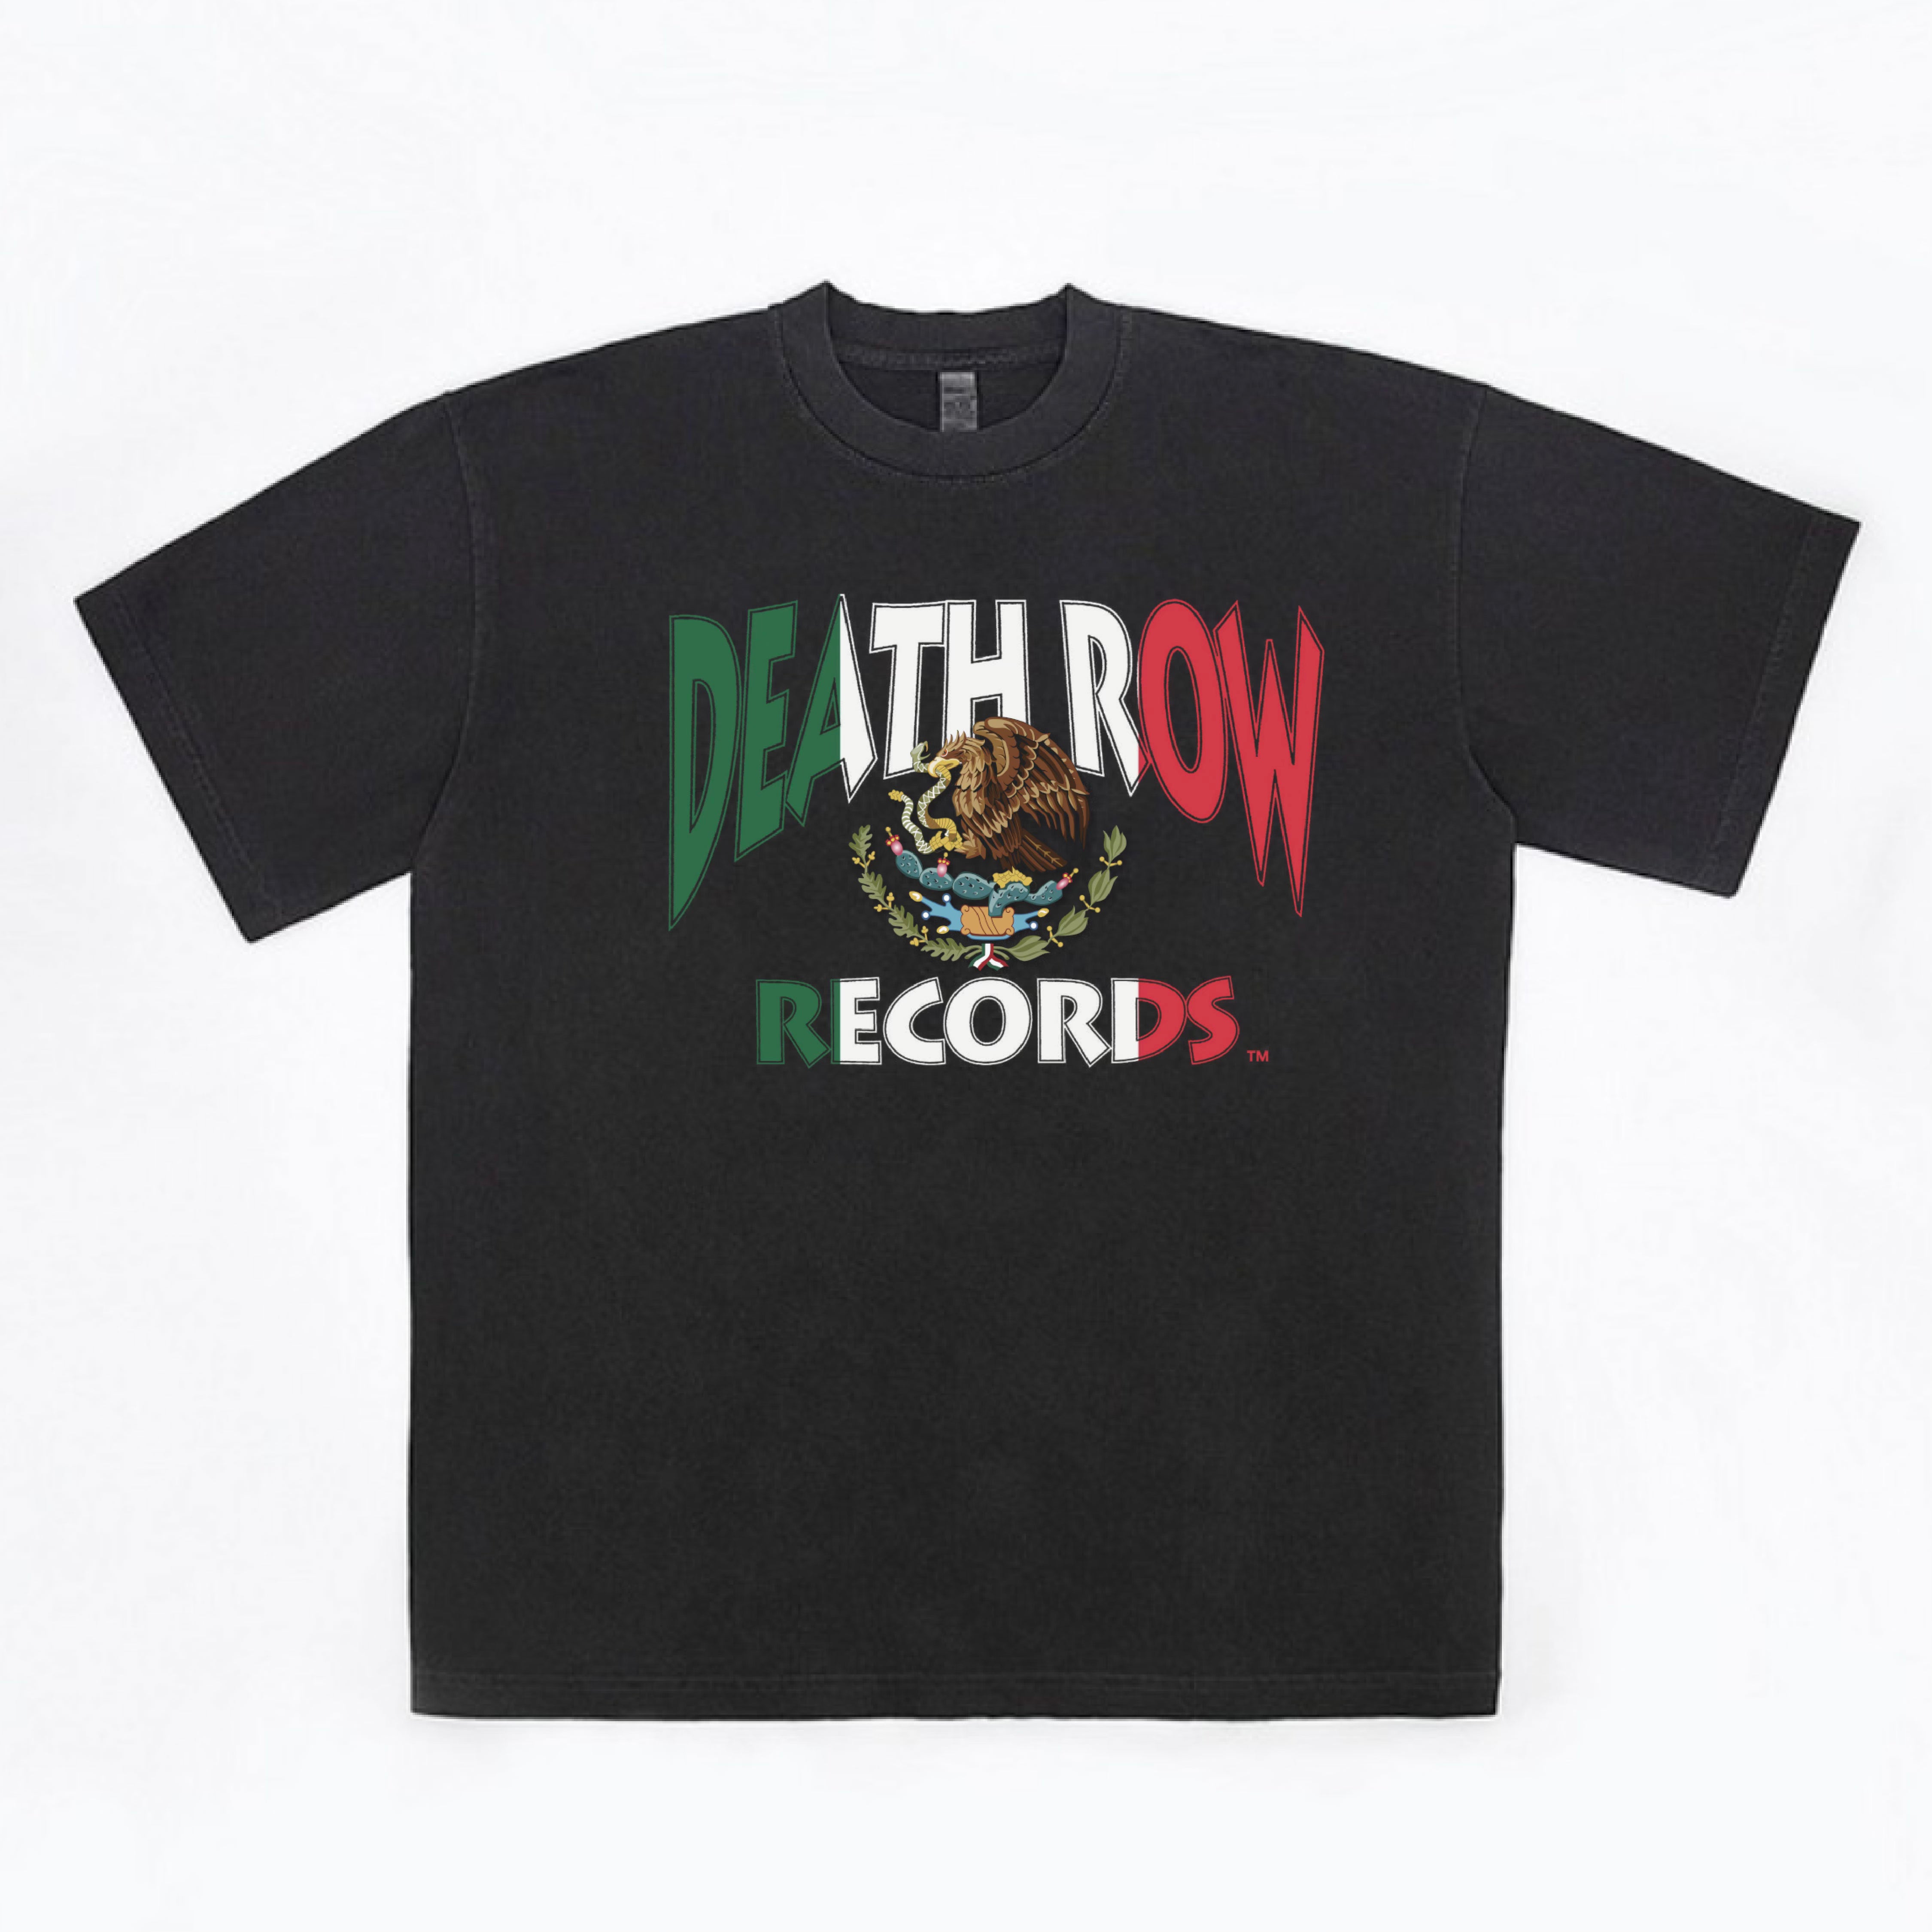 Death Row Mexico Tee Limited Edition